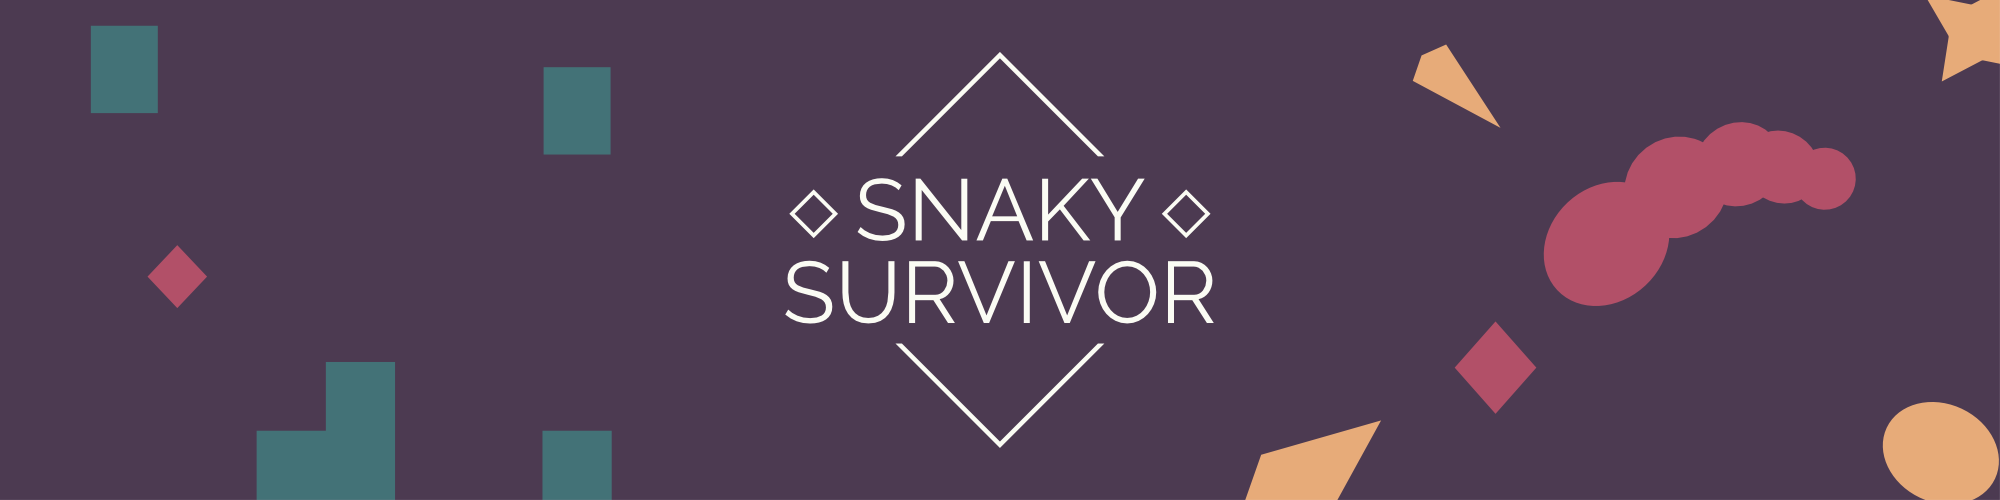 Snaky Survivor